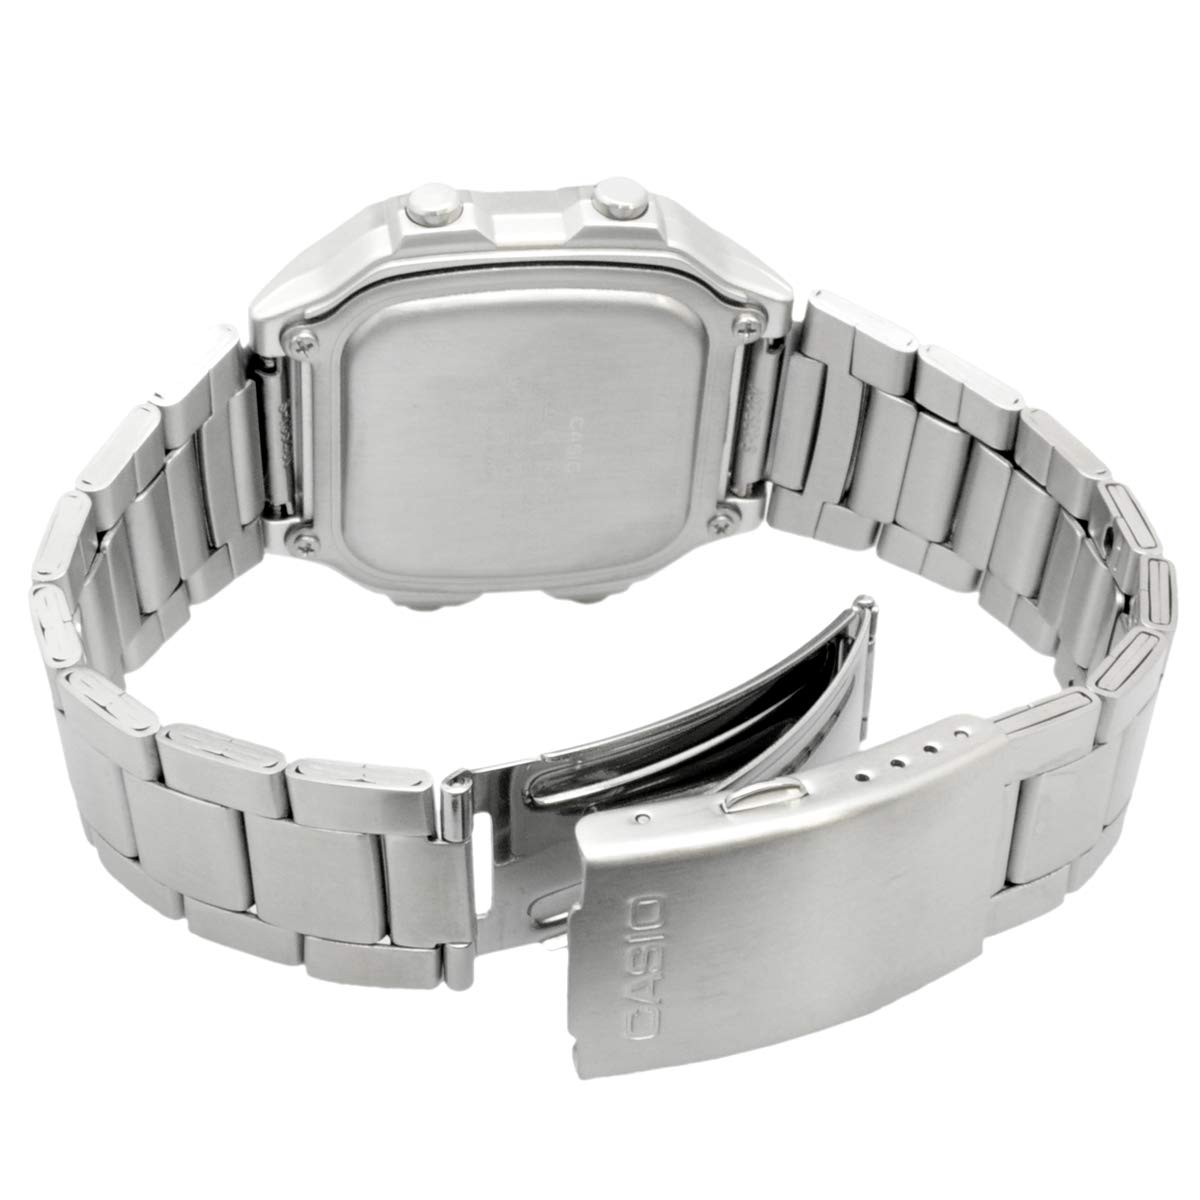 Casio World Time AE-1200WHD-1AV Men's Digital Watch, Metal Band, Silver, Bracelet Type